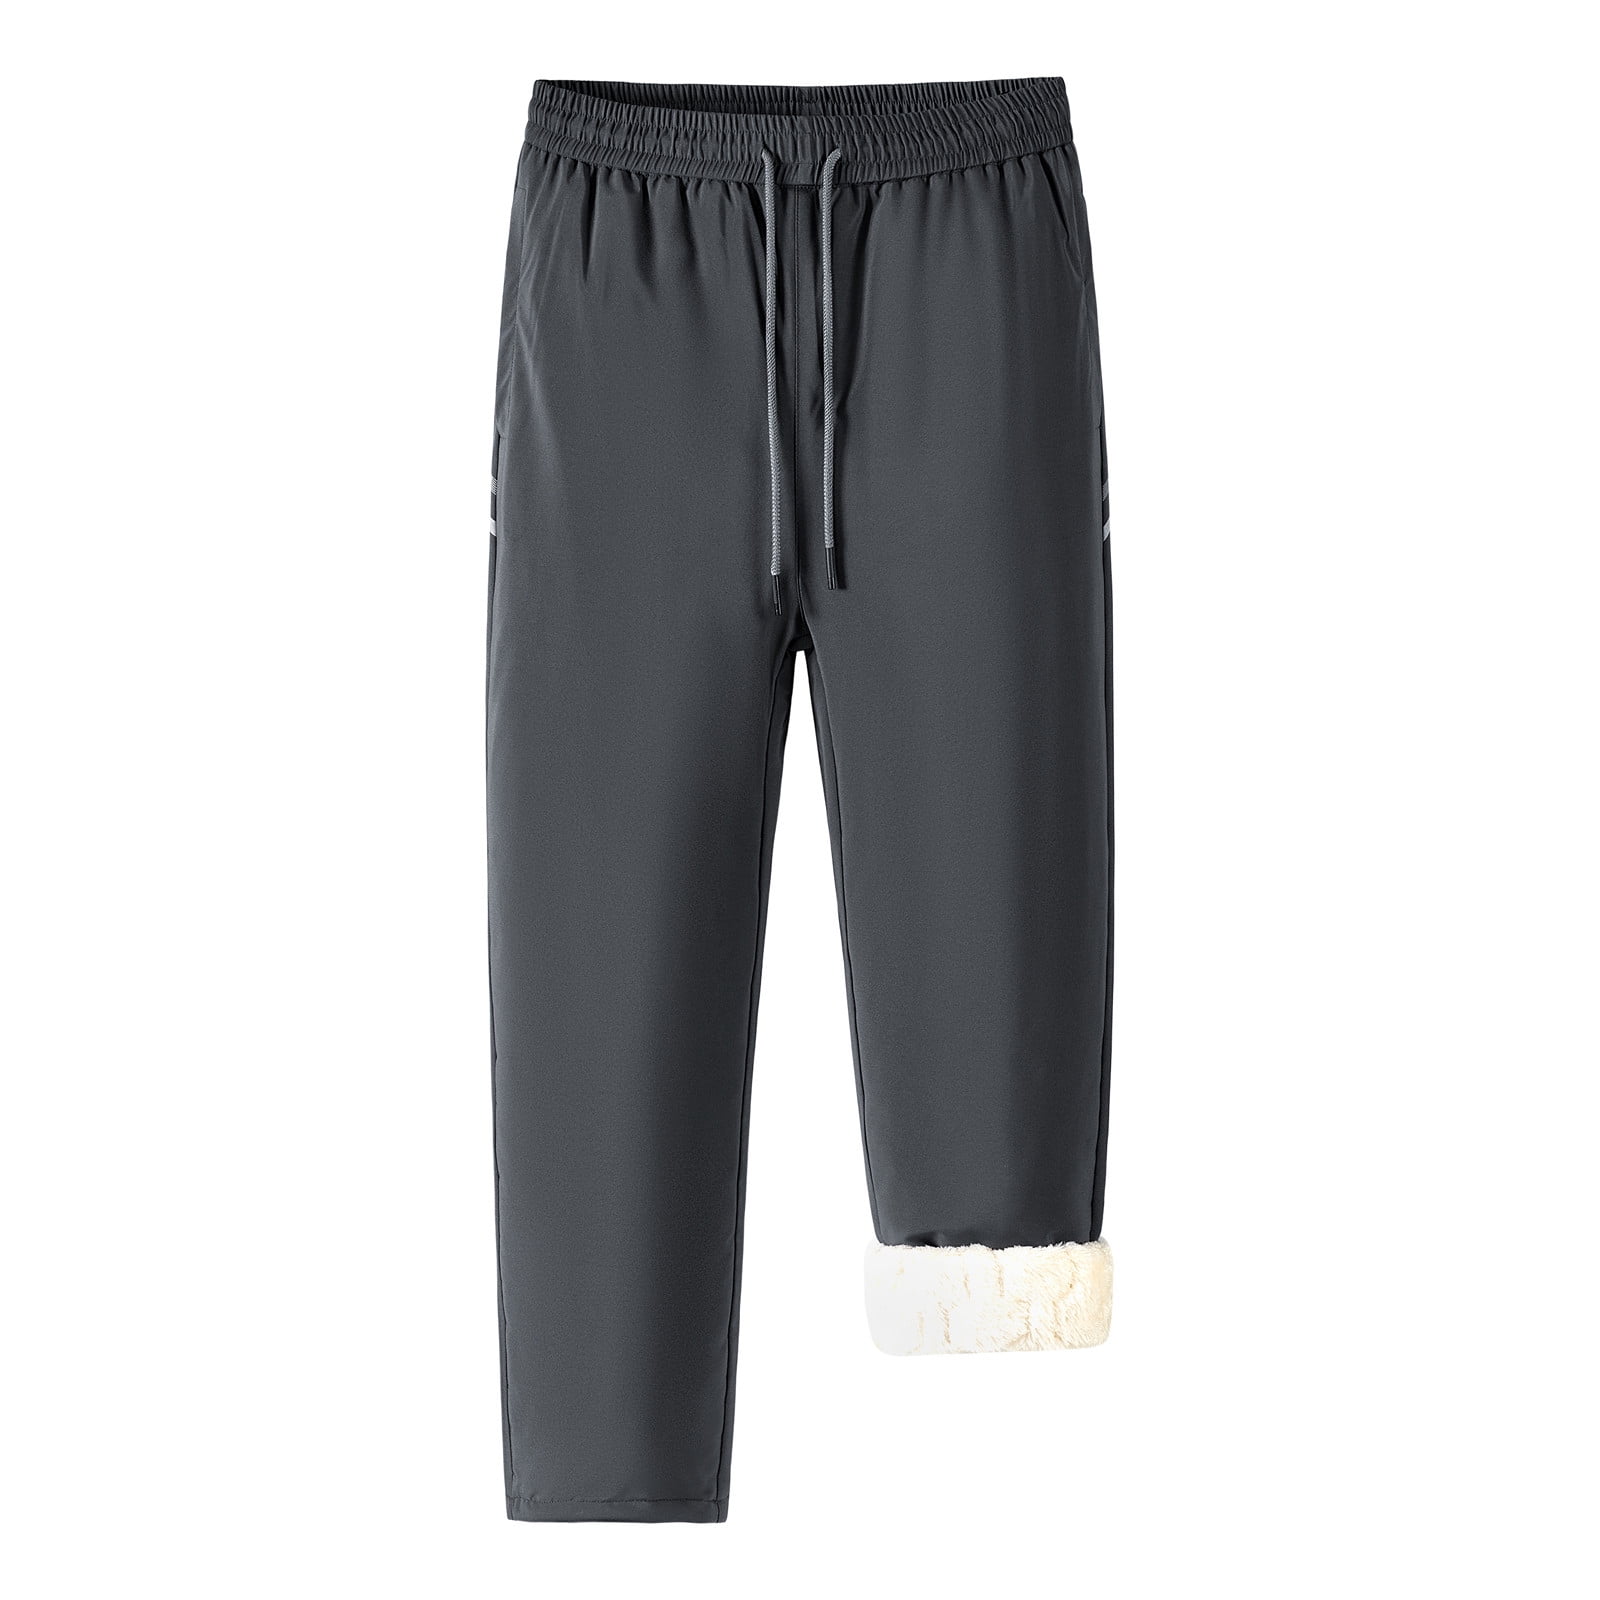 Mens Thermal Sweatpanst Cotton Warm Winter Pants Outdoor Sports Joggers  Fleece Lined Drawstring Elastic Waist